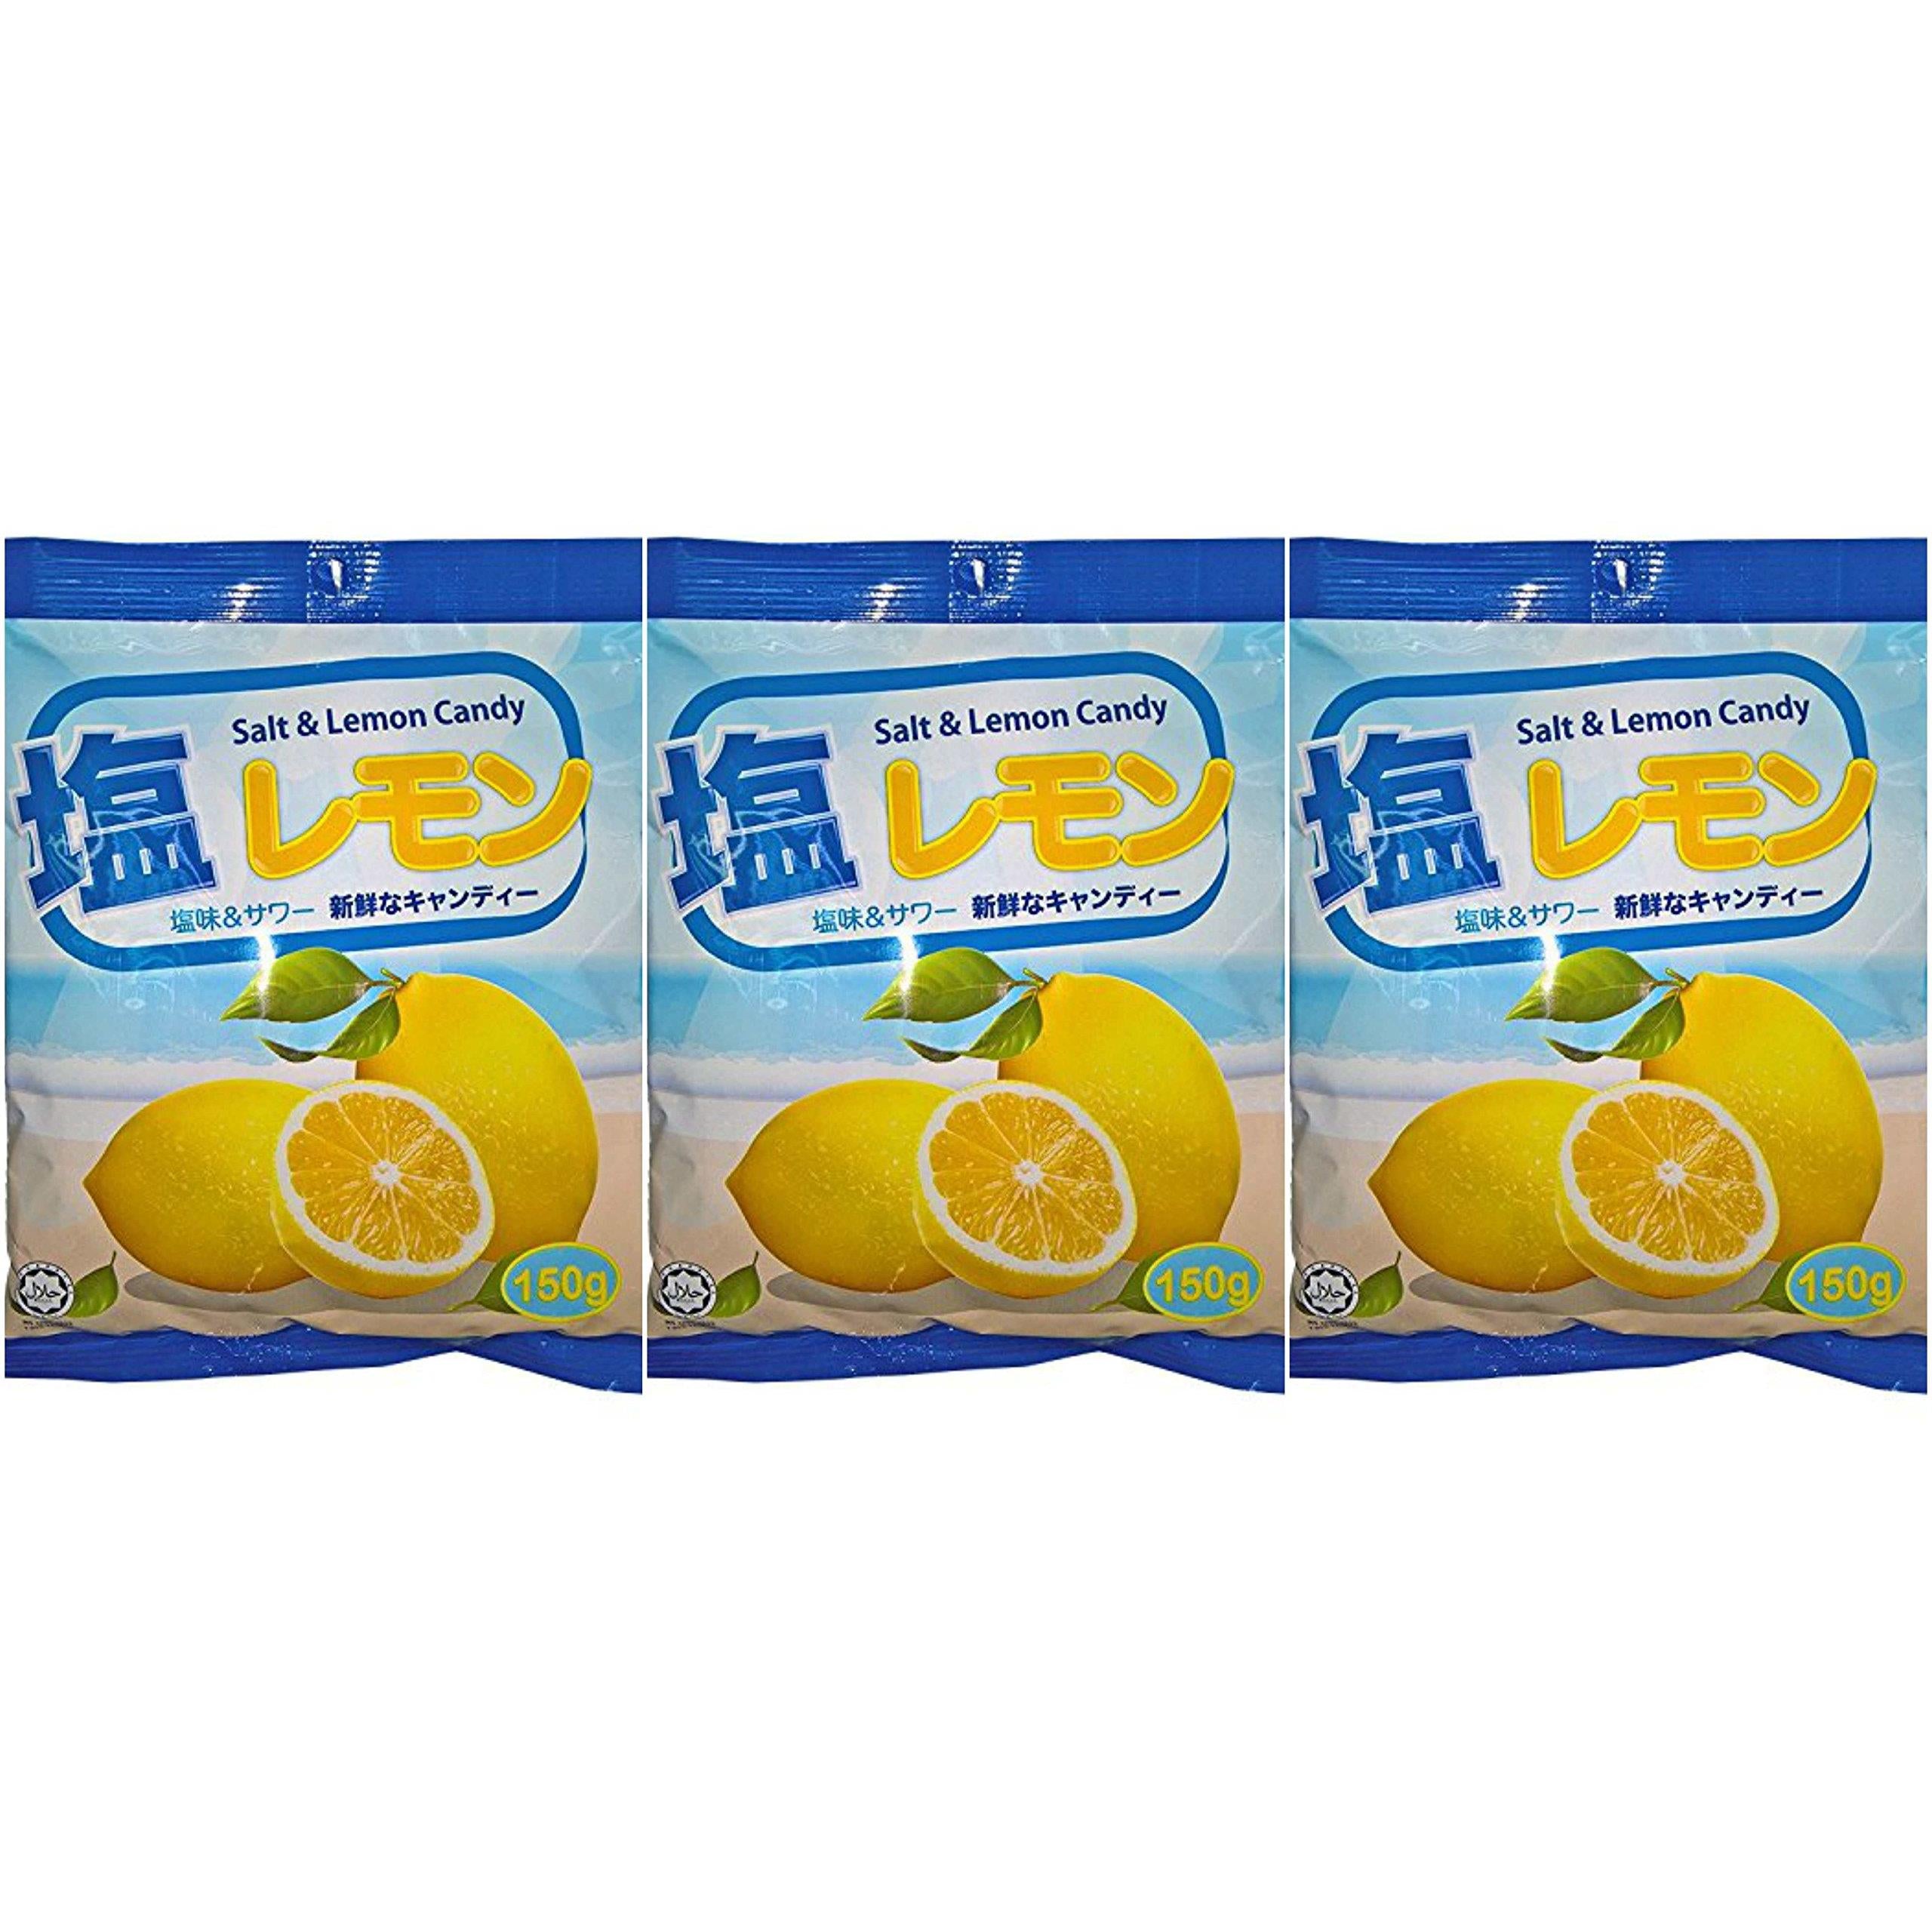 Salt and Lemon Hard Candy, Pack of 3